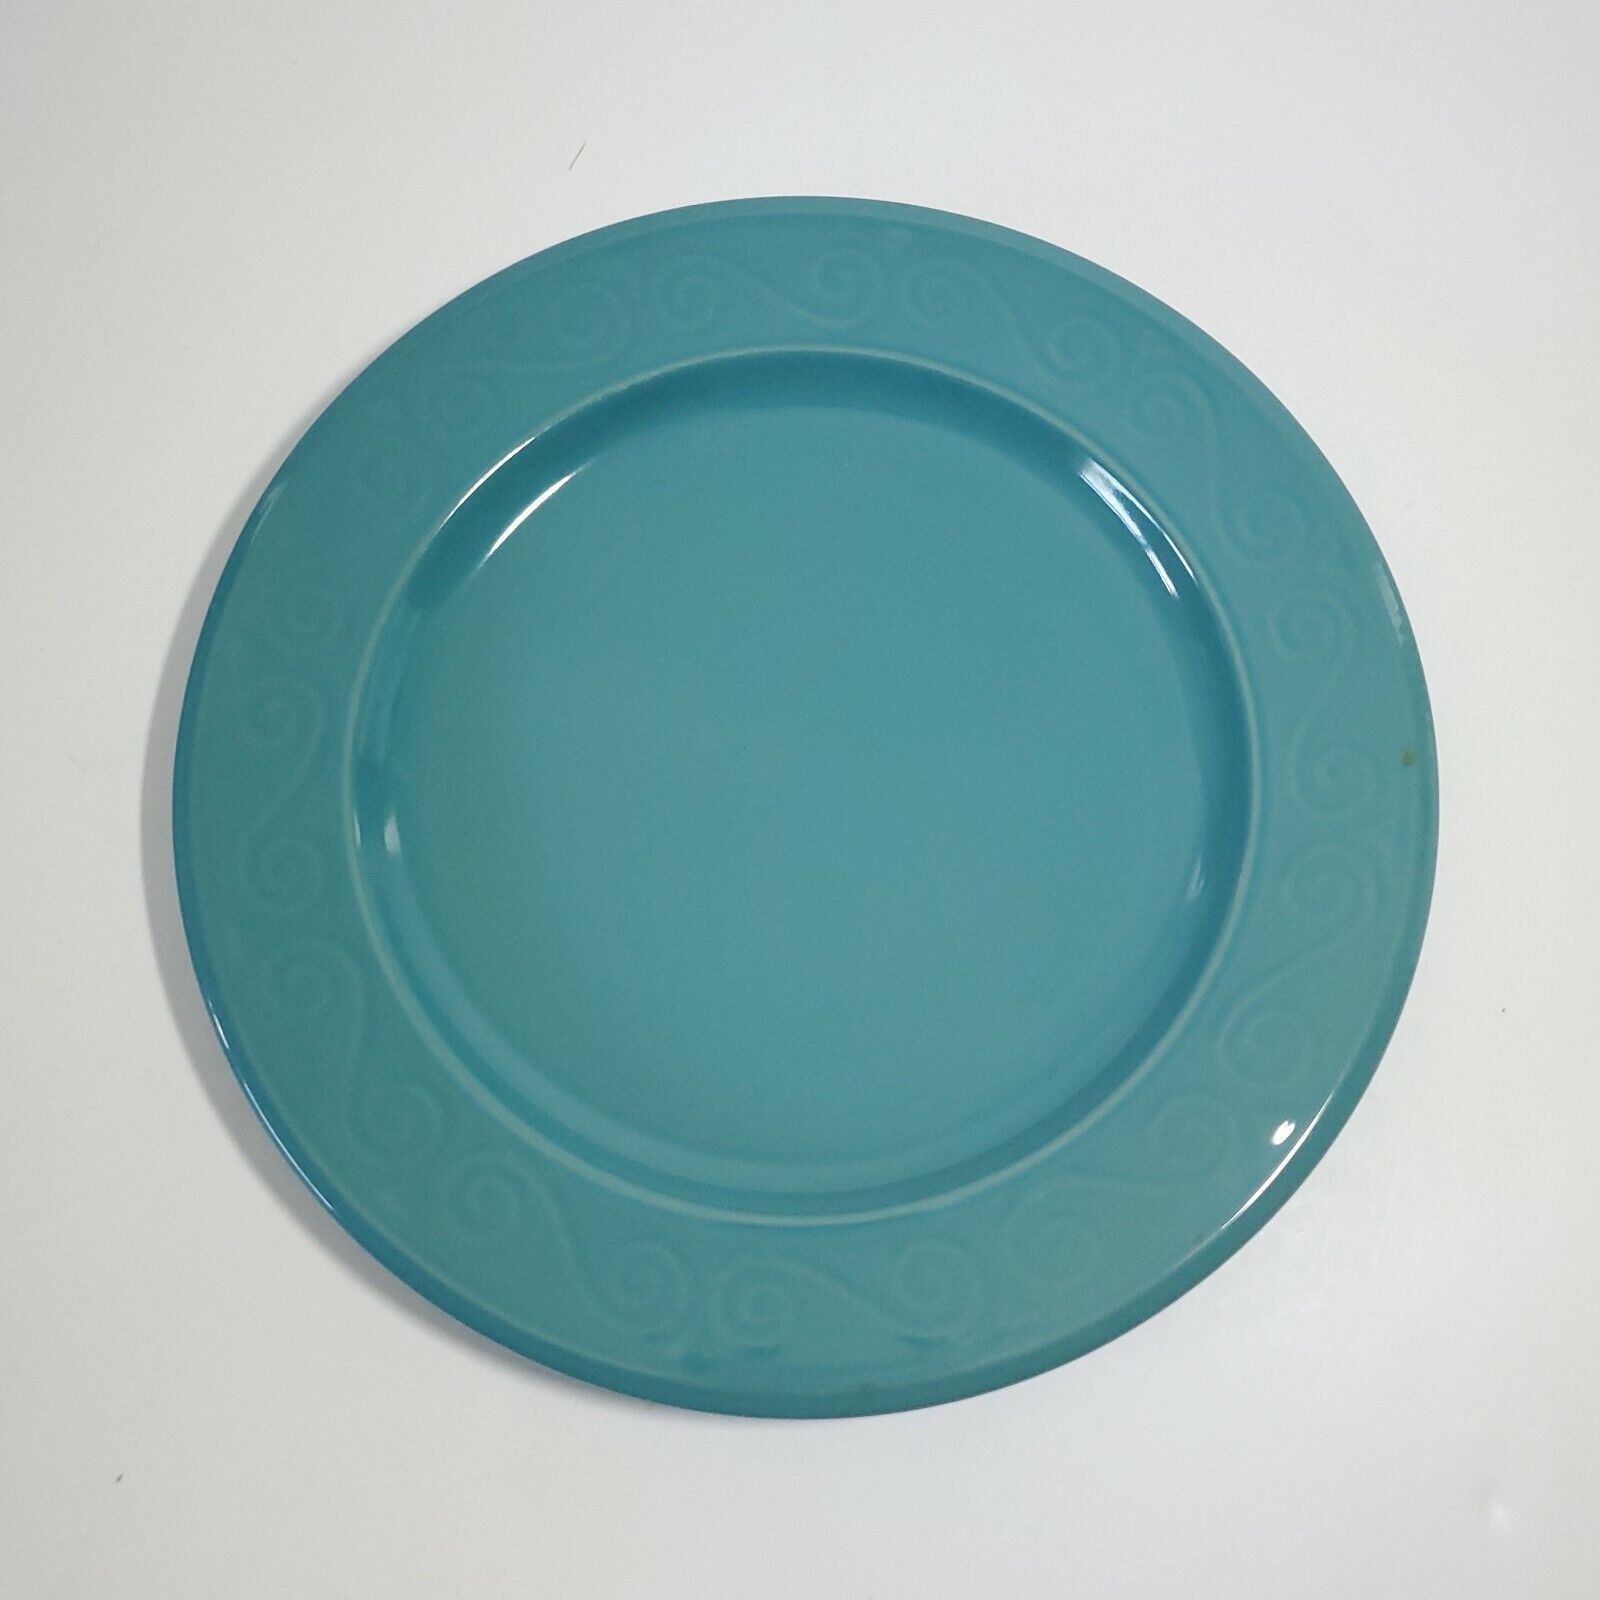 x2 Royal Norfolk Turquoise Embossed Scrolls 10.25in Dinner Plates Blue Teal Aqua Royal Norfolk - фотография #5